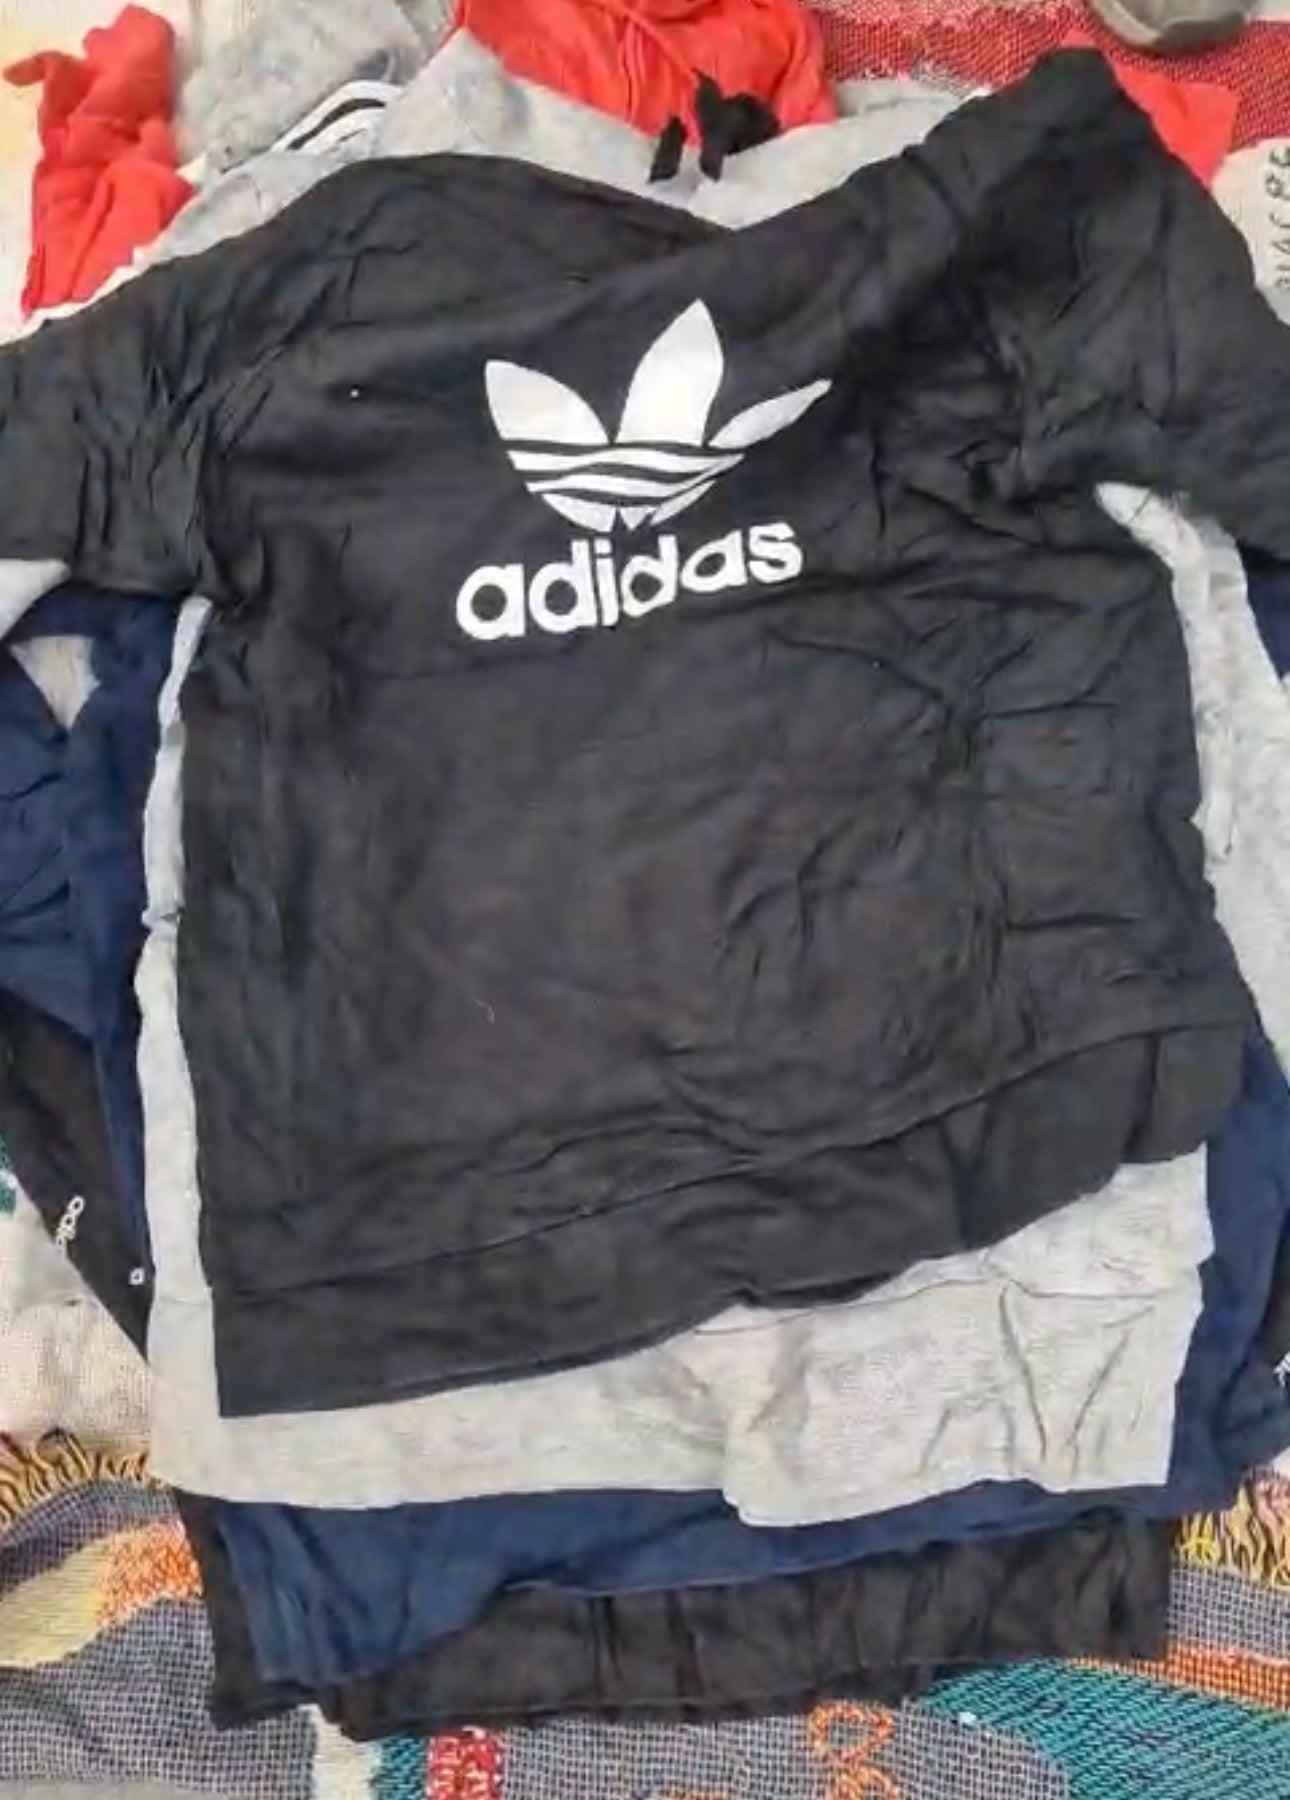 Adidas Sweatshirts and Hoodies Mix 45kg Bale